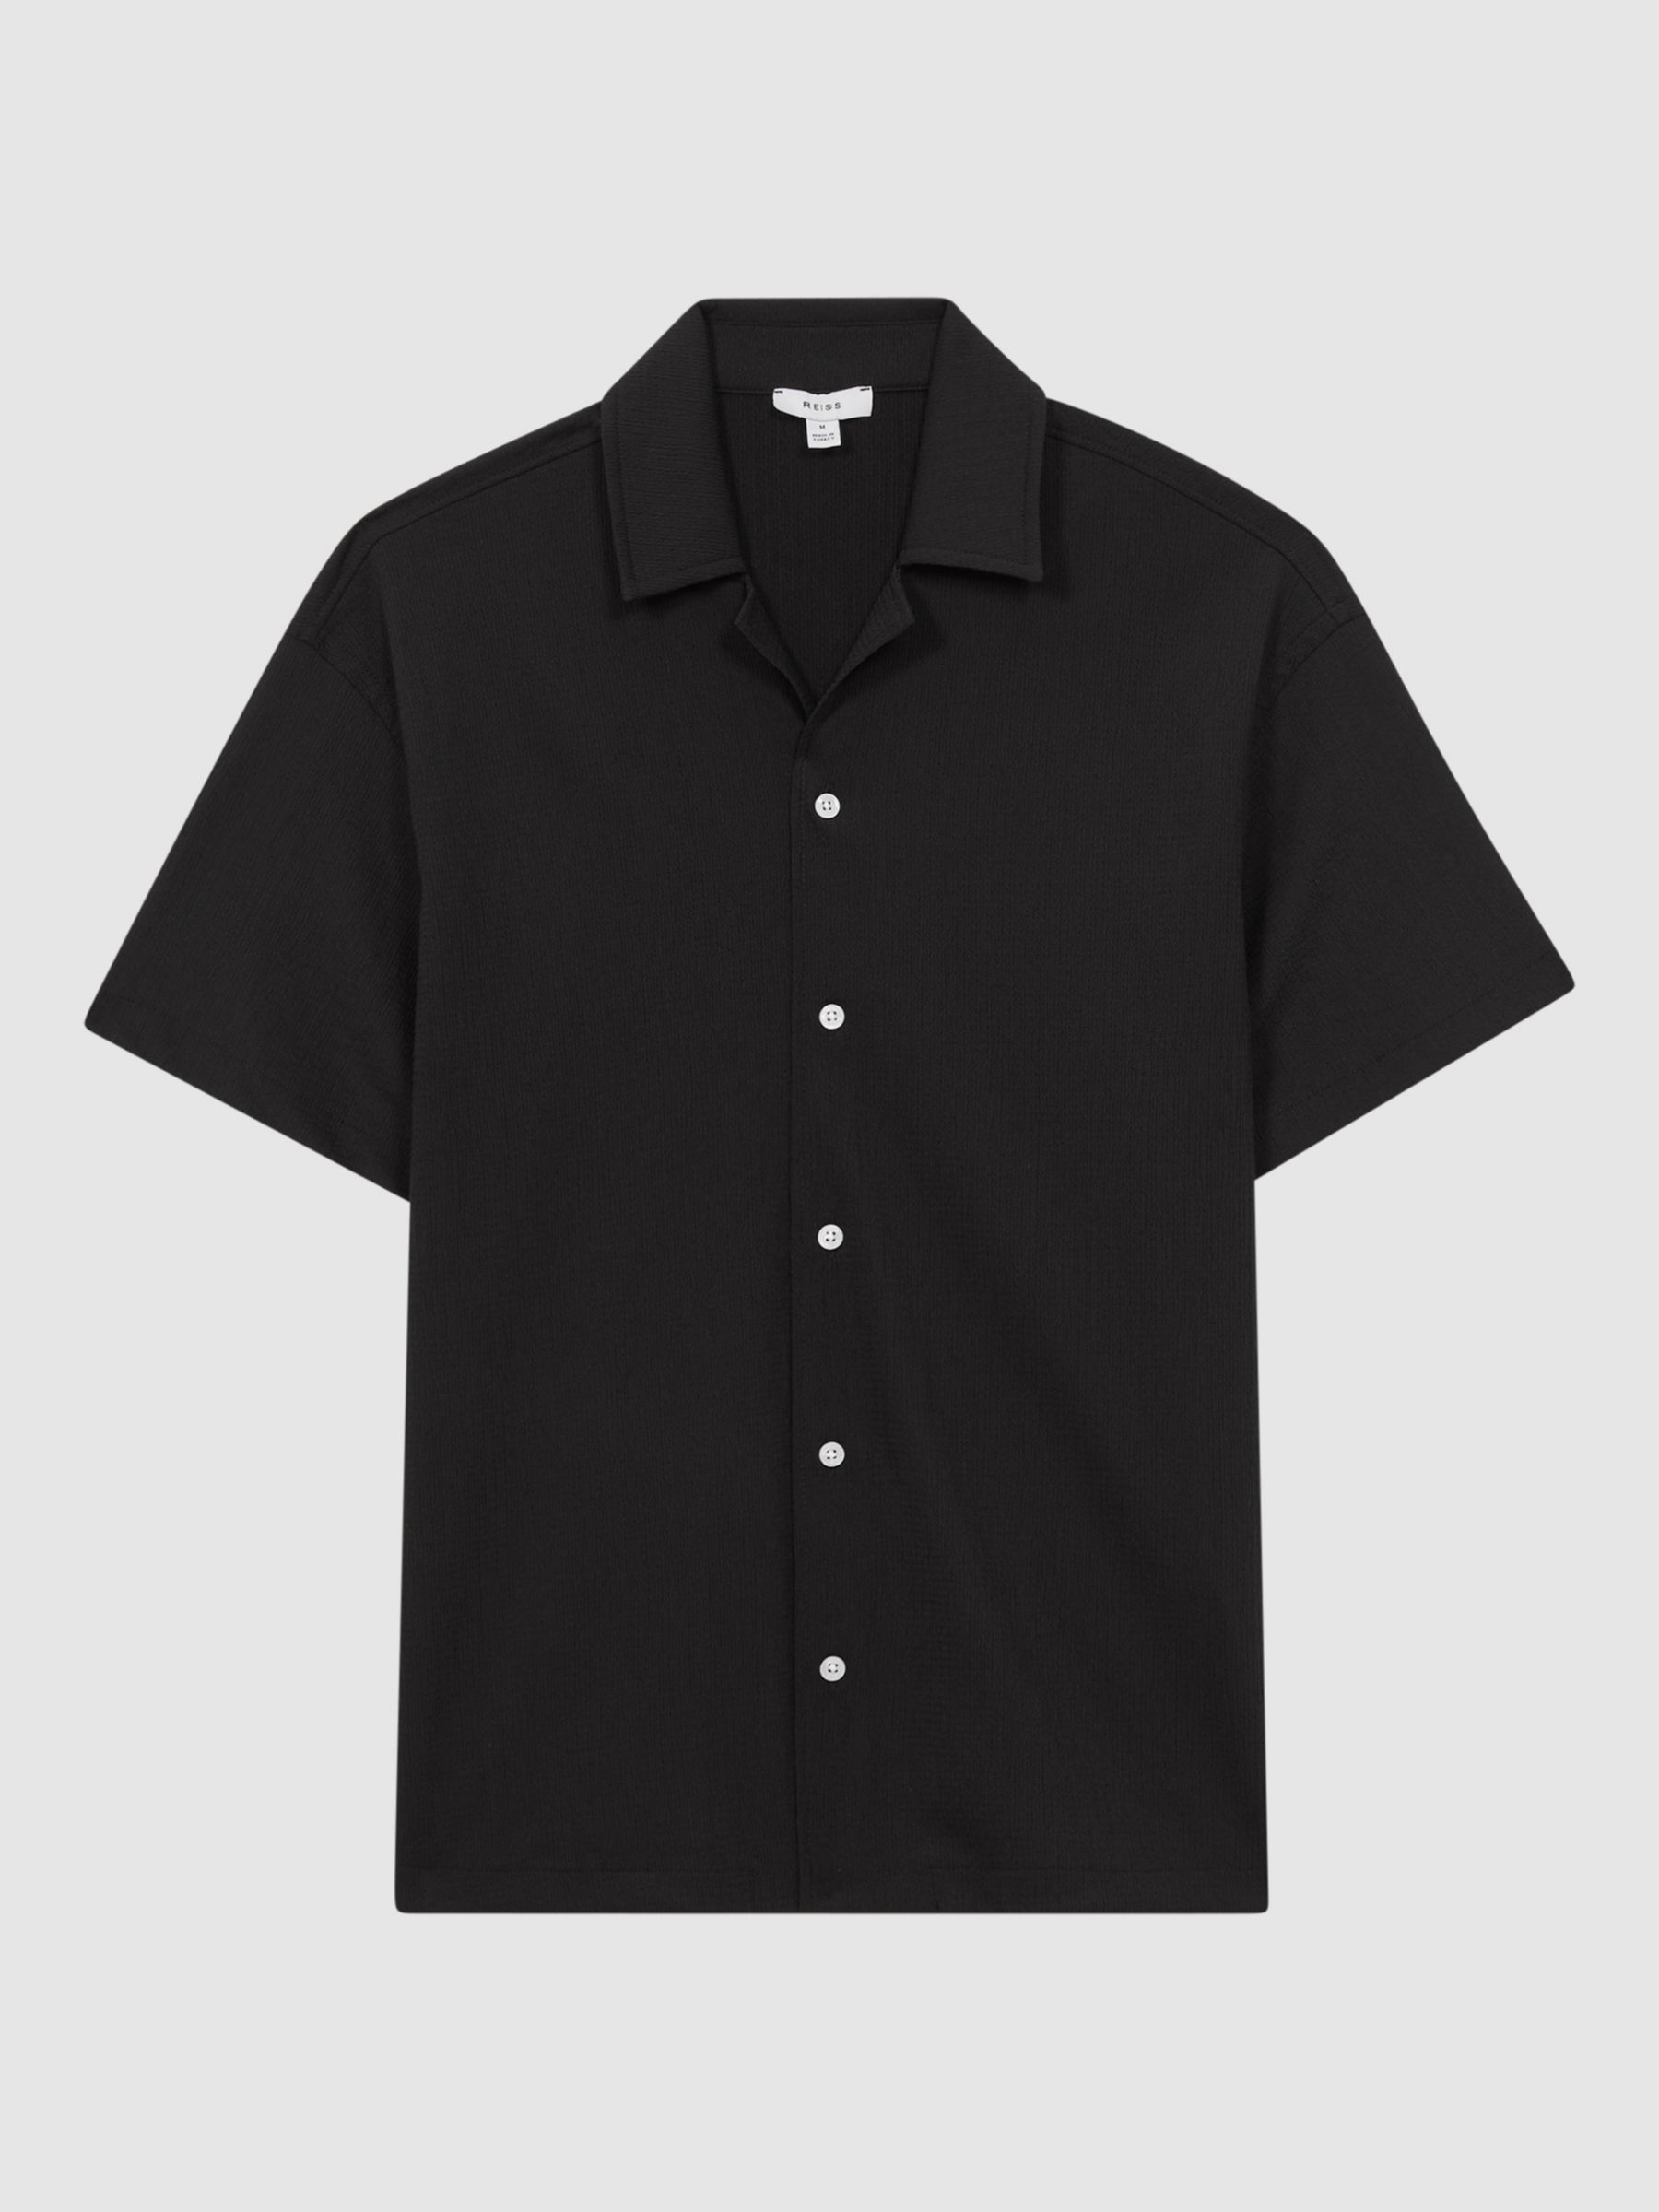 Reiss Darcy Short Sleeve Textured Shirt, Black at John Lewis & Partners